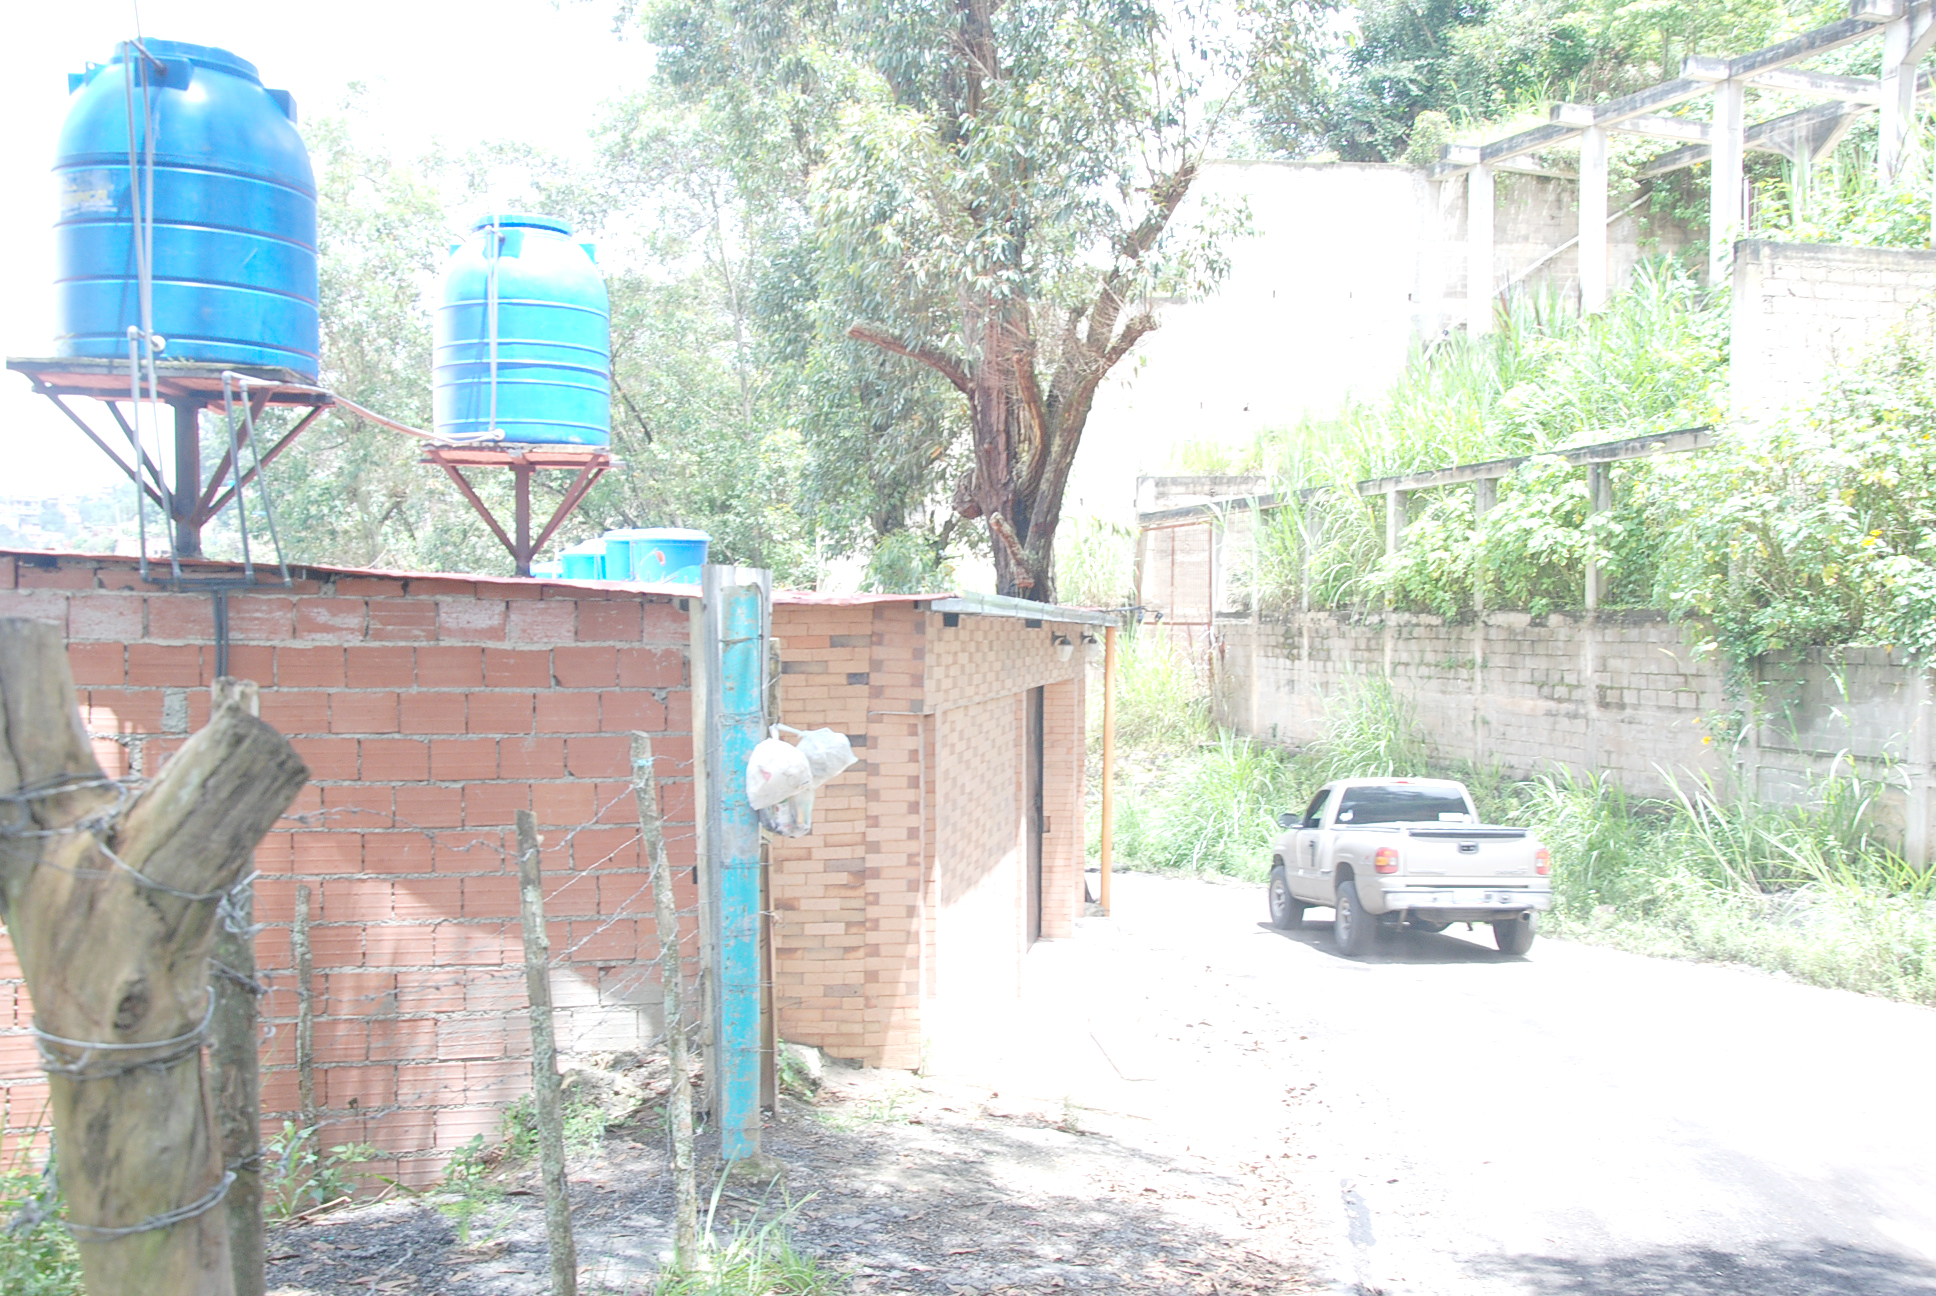 Servicio de agua presenta  fallas en Barrio Miranda